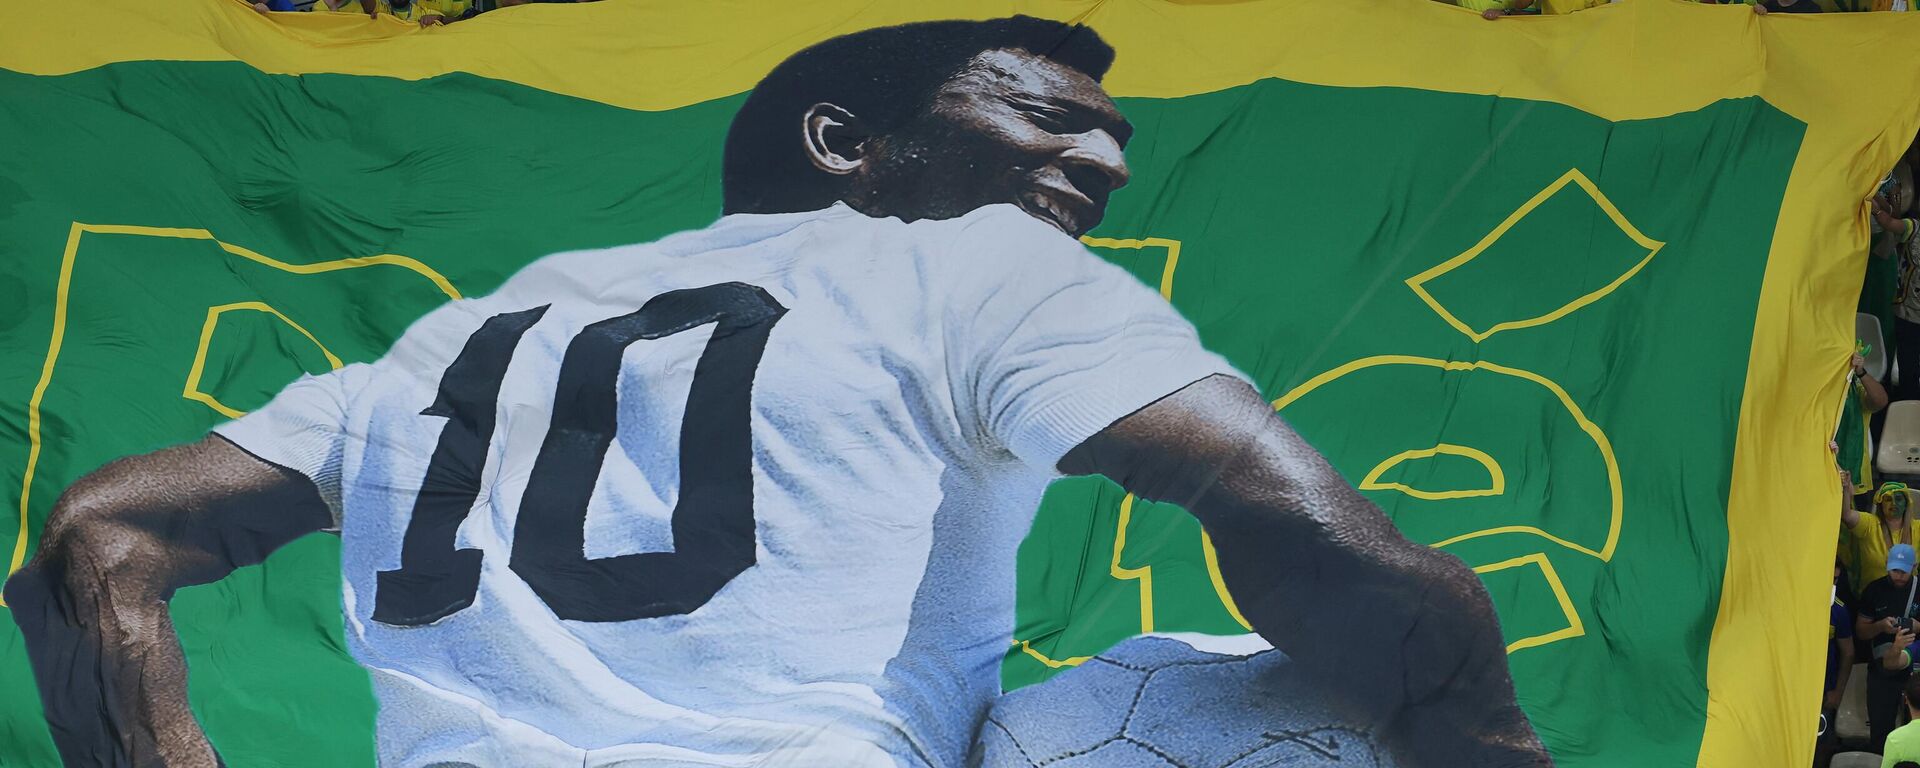 Бразильский футболист Пеле на плакате во время матча между сборными Камеруна и Бразилии на ЧМ-2022 в Катаре  - Sputnik Србија, 1920, 01.01.2023